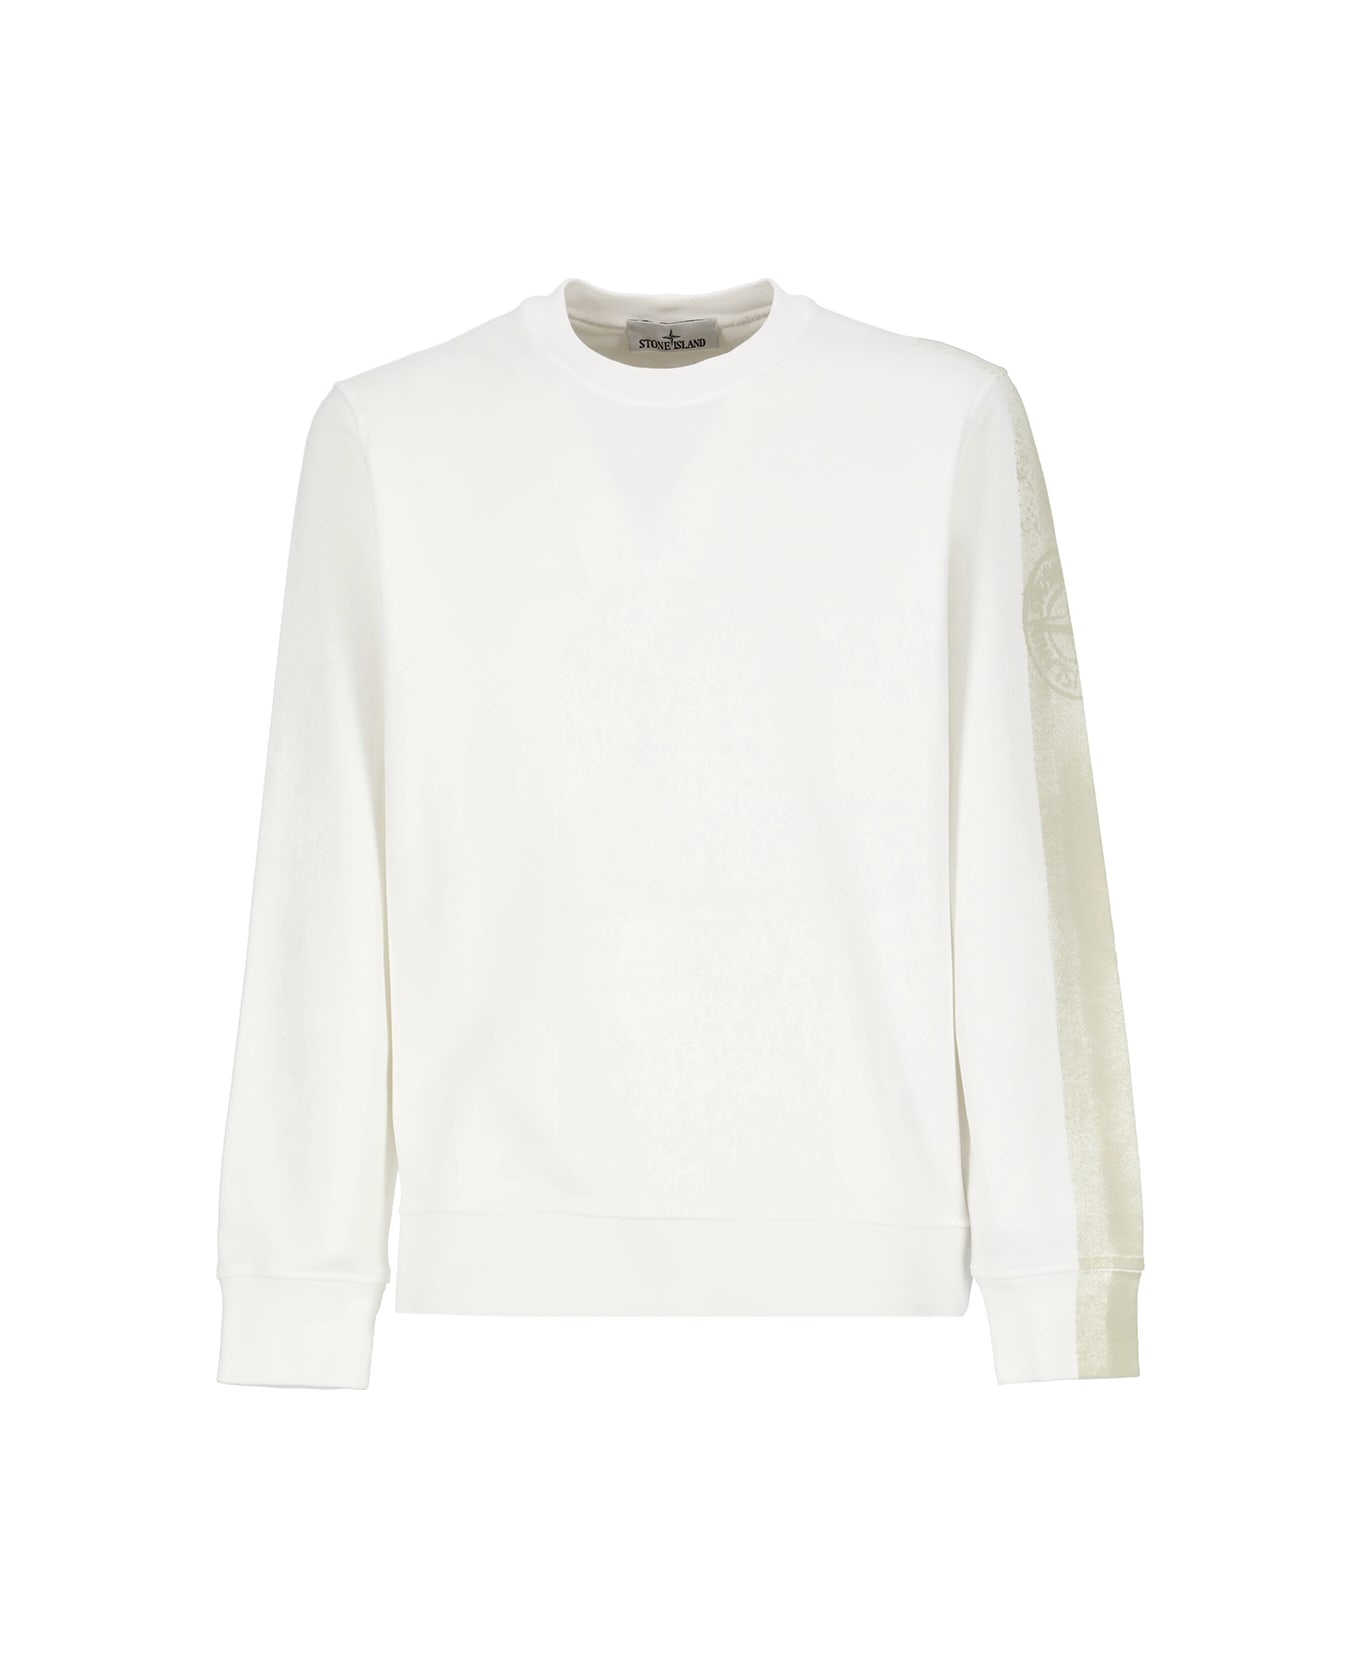 Stone Island Cotton Sweatshirt - White フリース